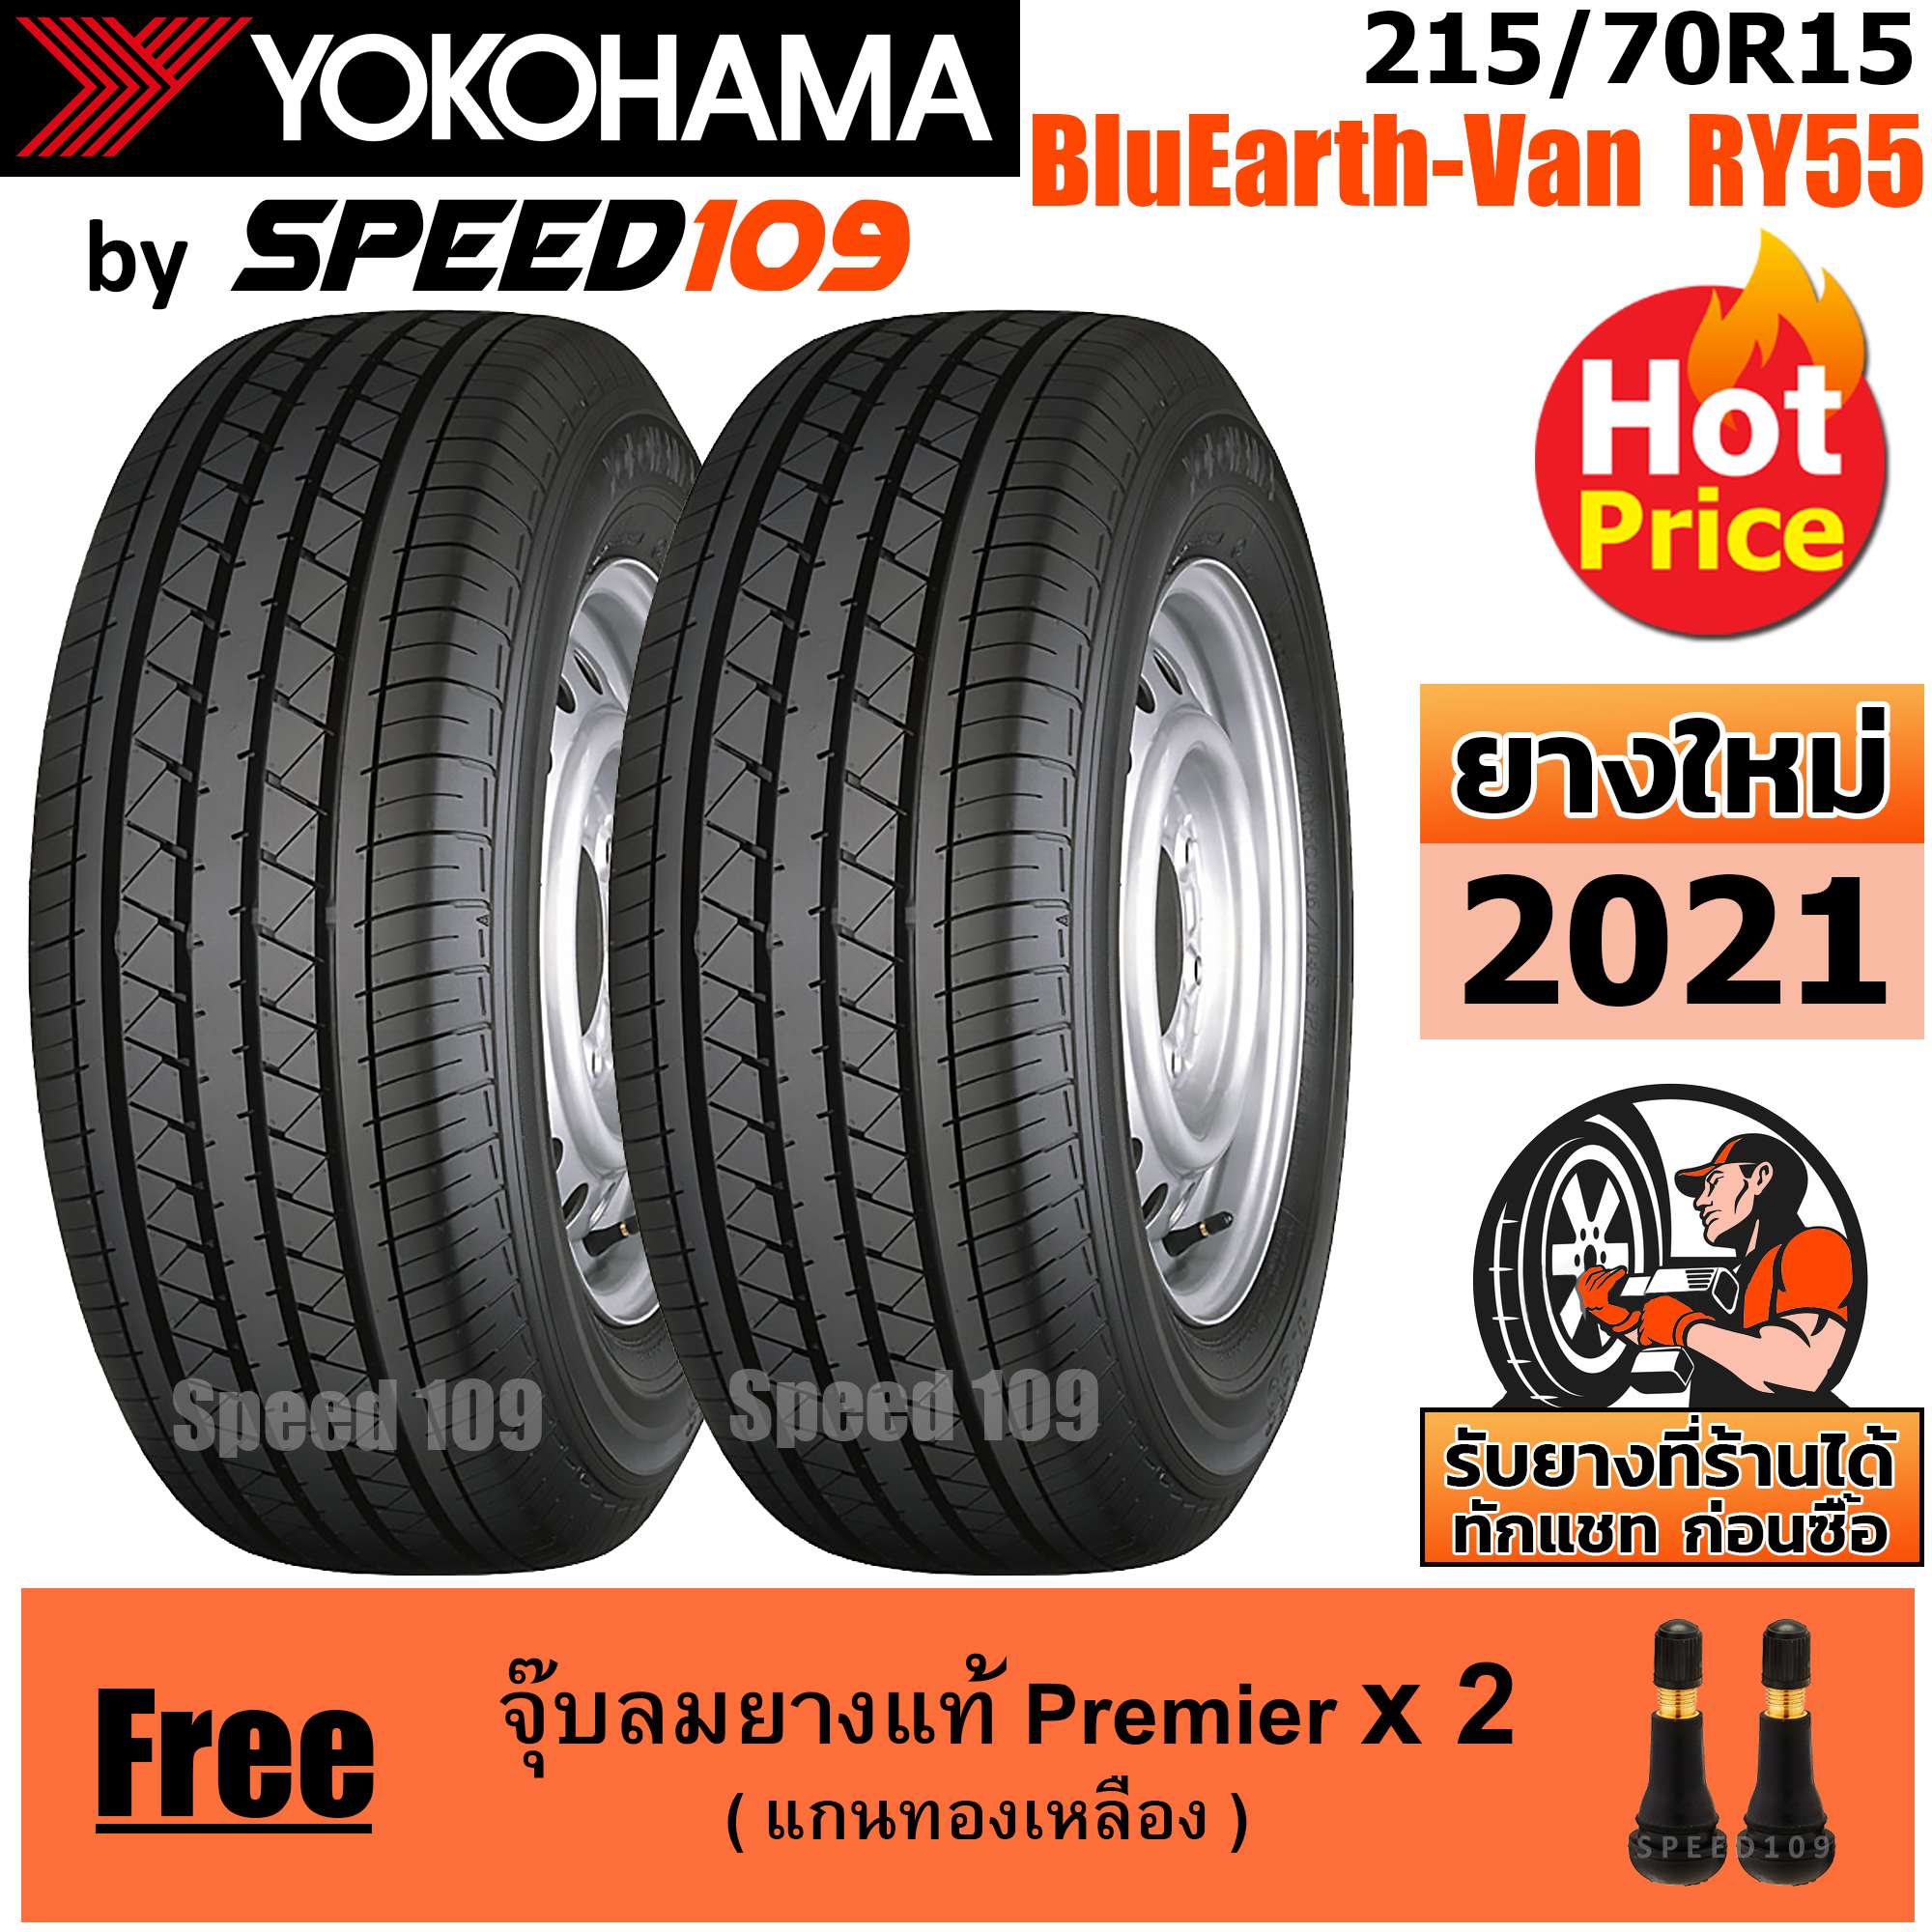 YOKOHAMA ยางรถยนต์ ขอบ 15 ขนาด 215/70R15 รุ่น BluEarth-Van RY55 - 2 เส้น (ปี 2021)